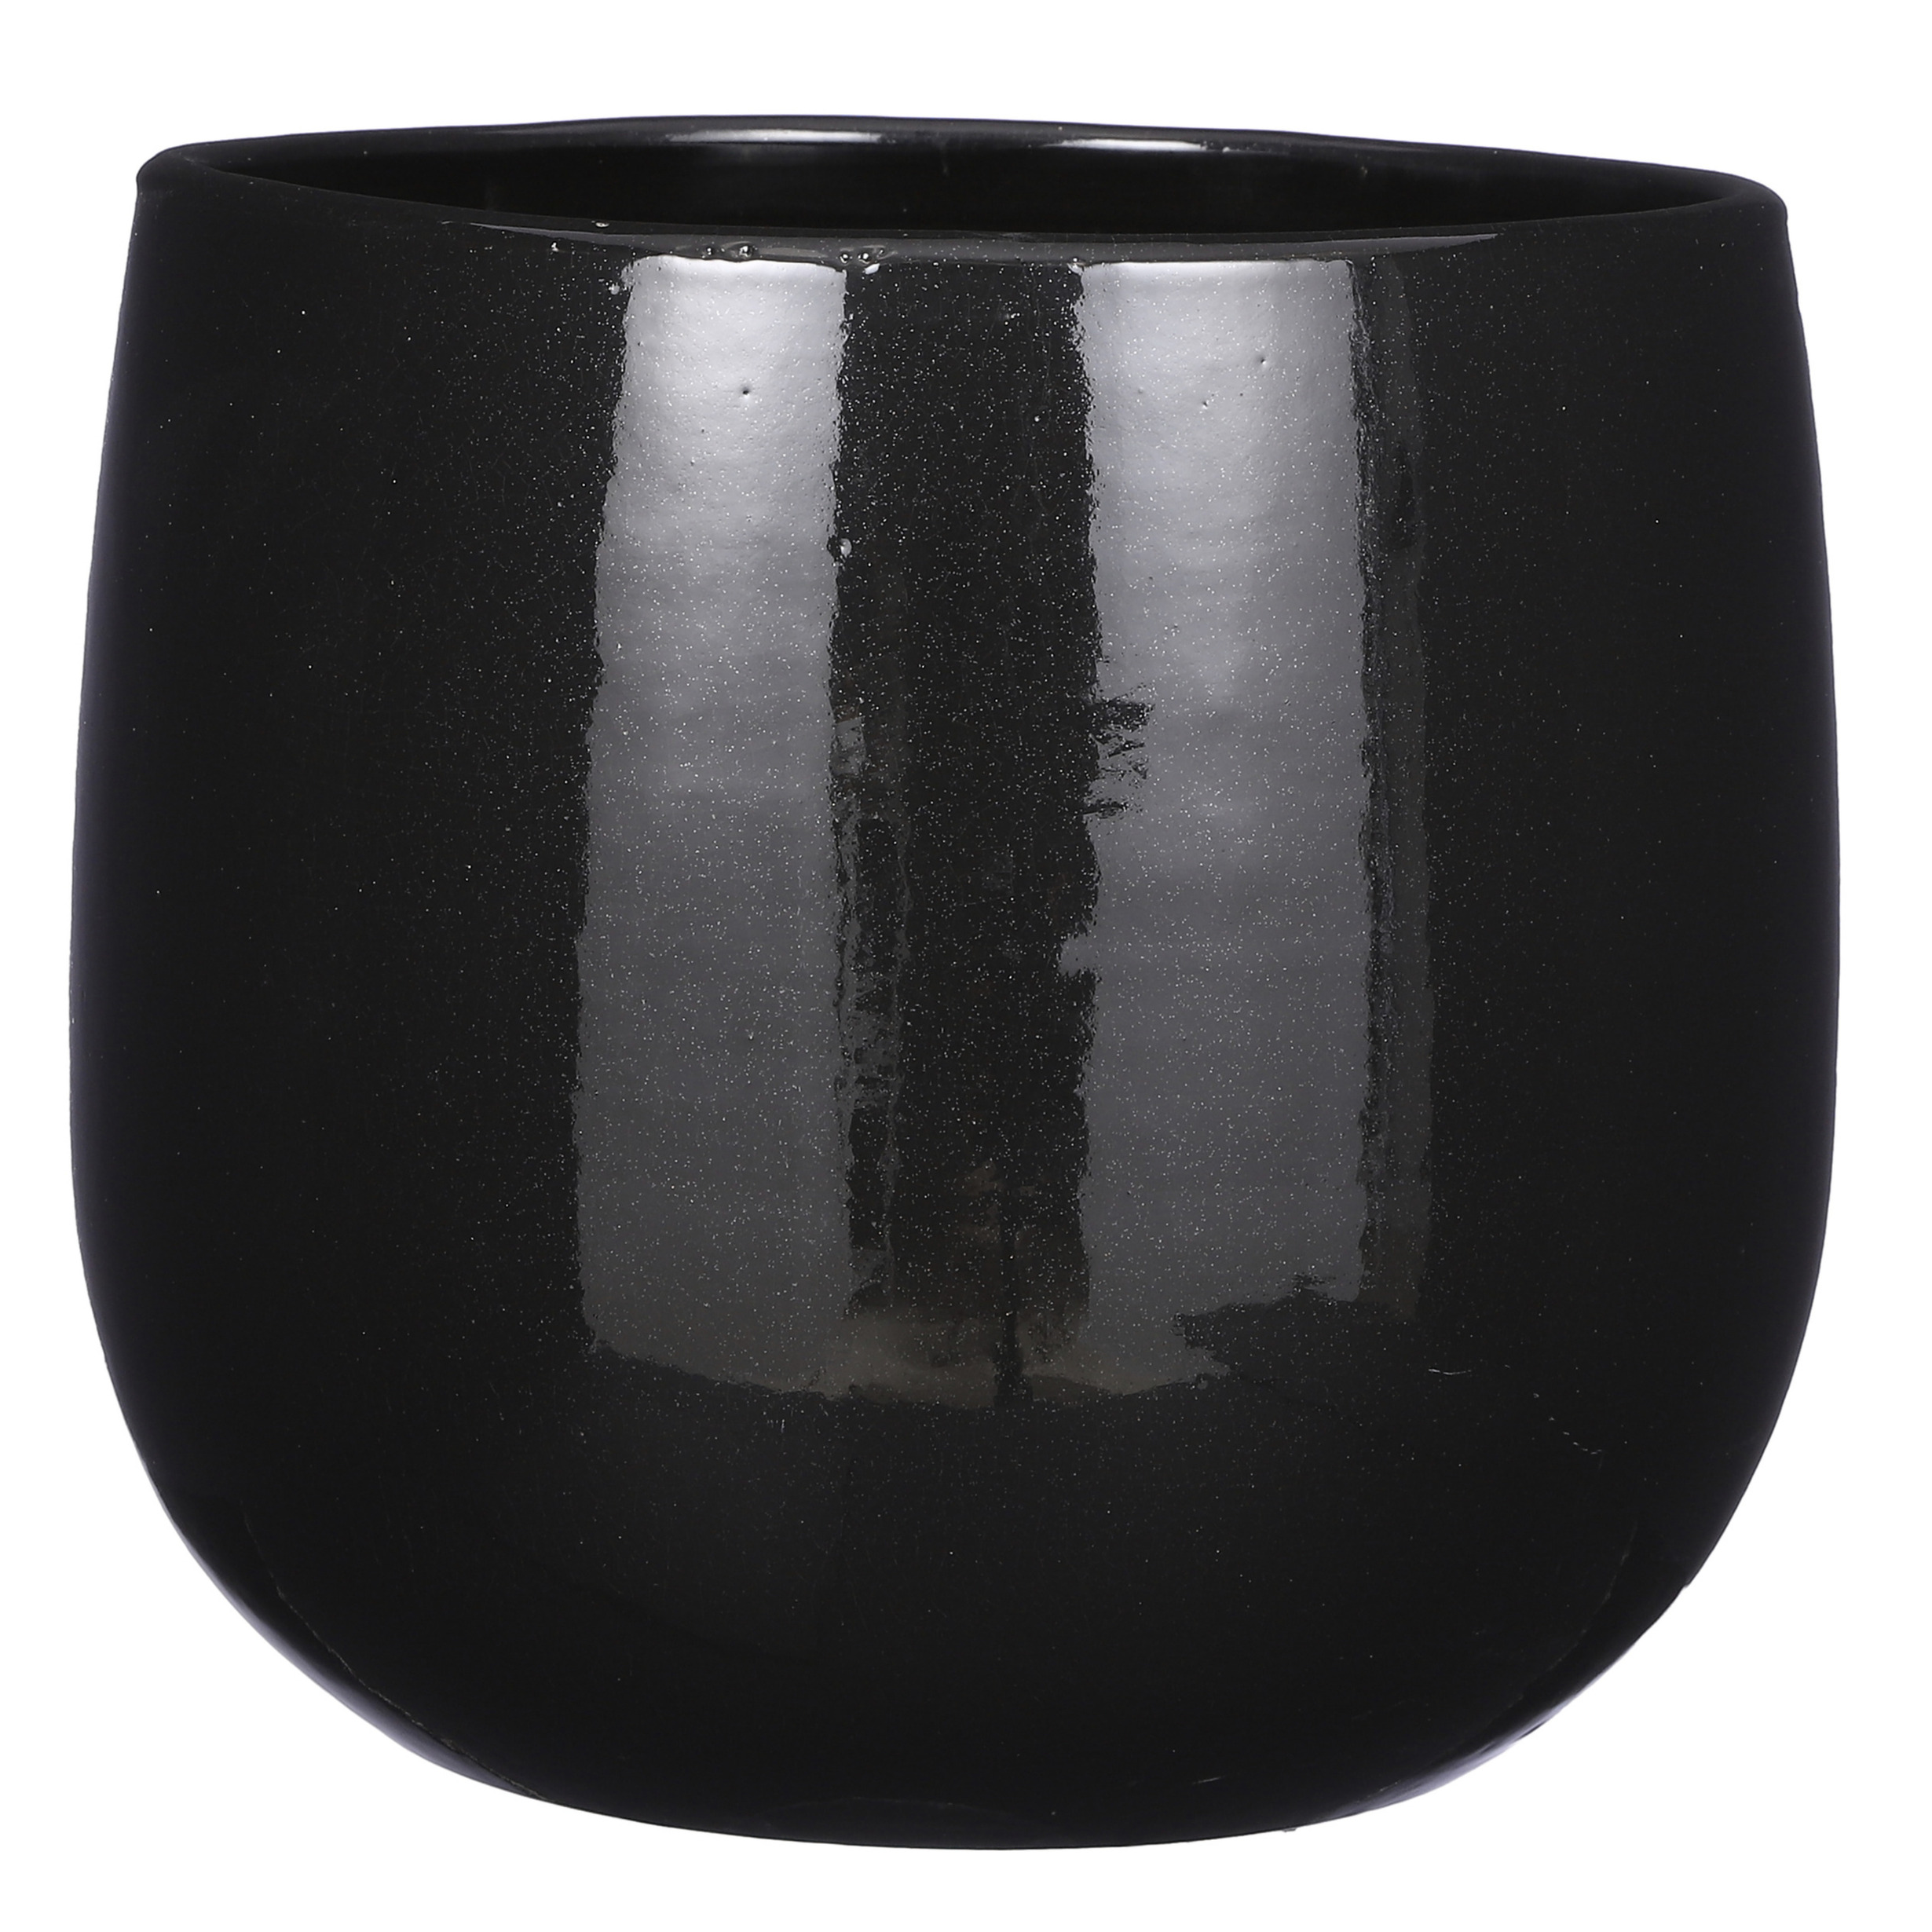 Plantenpot-bloempot keramiek zwart speels licht gevlekt patroon D29-H25 cm